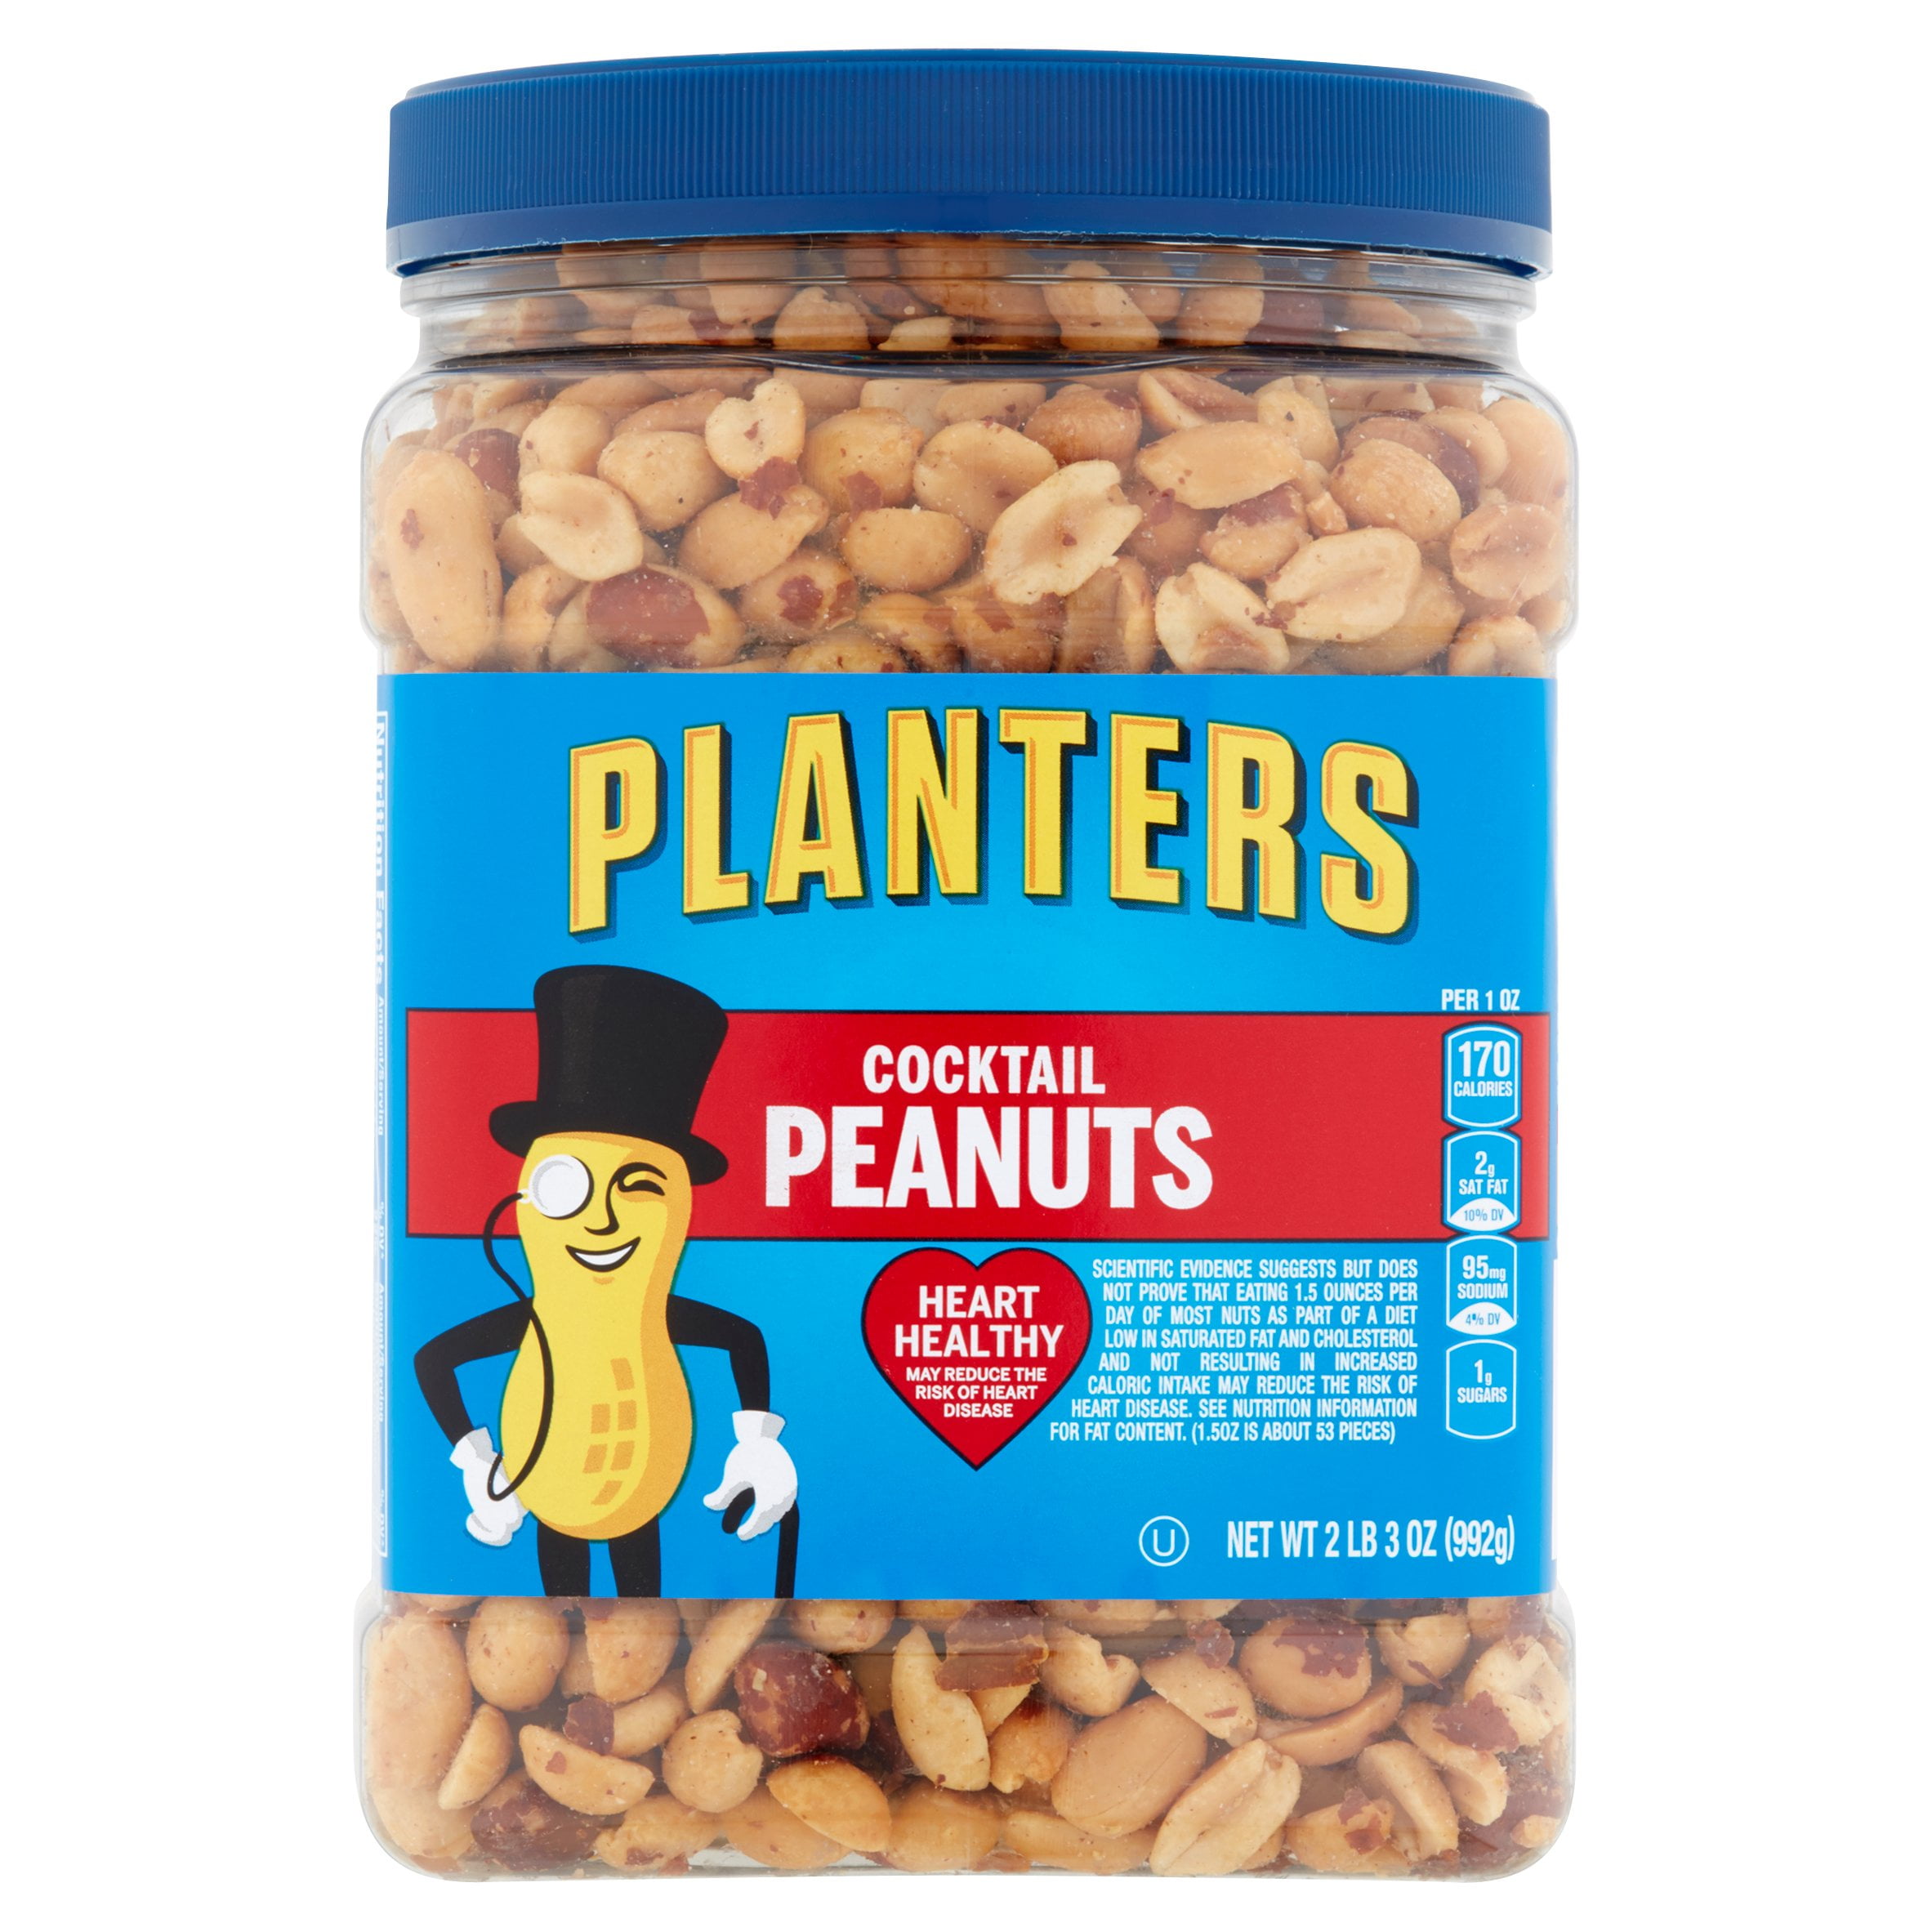 Planters Cocktail Peanuts, 35 Oz | eBay2365 x 2365